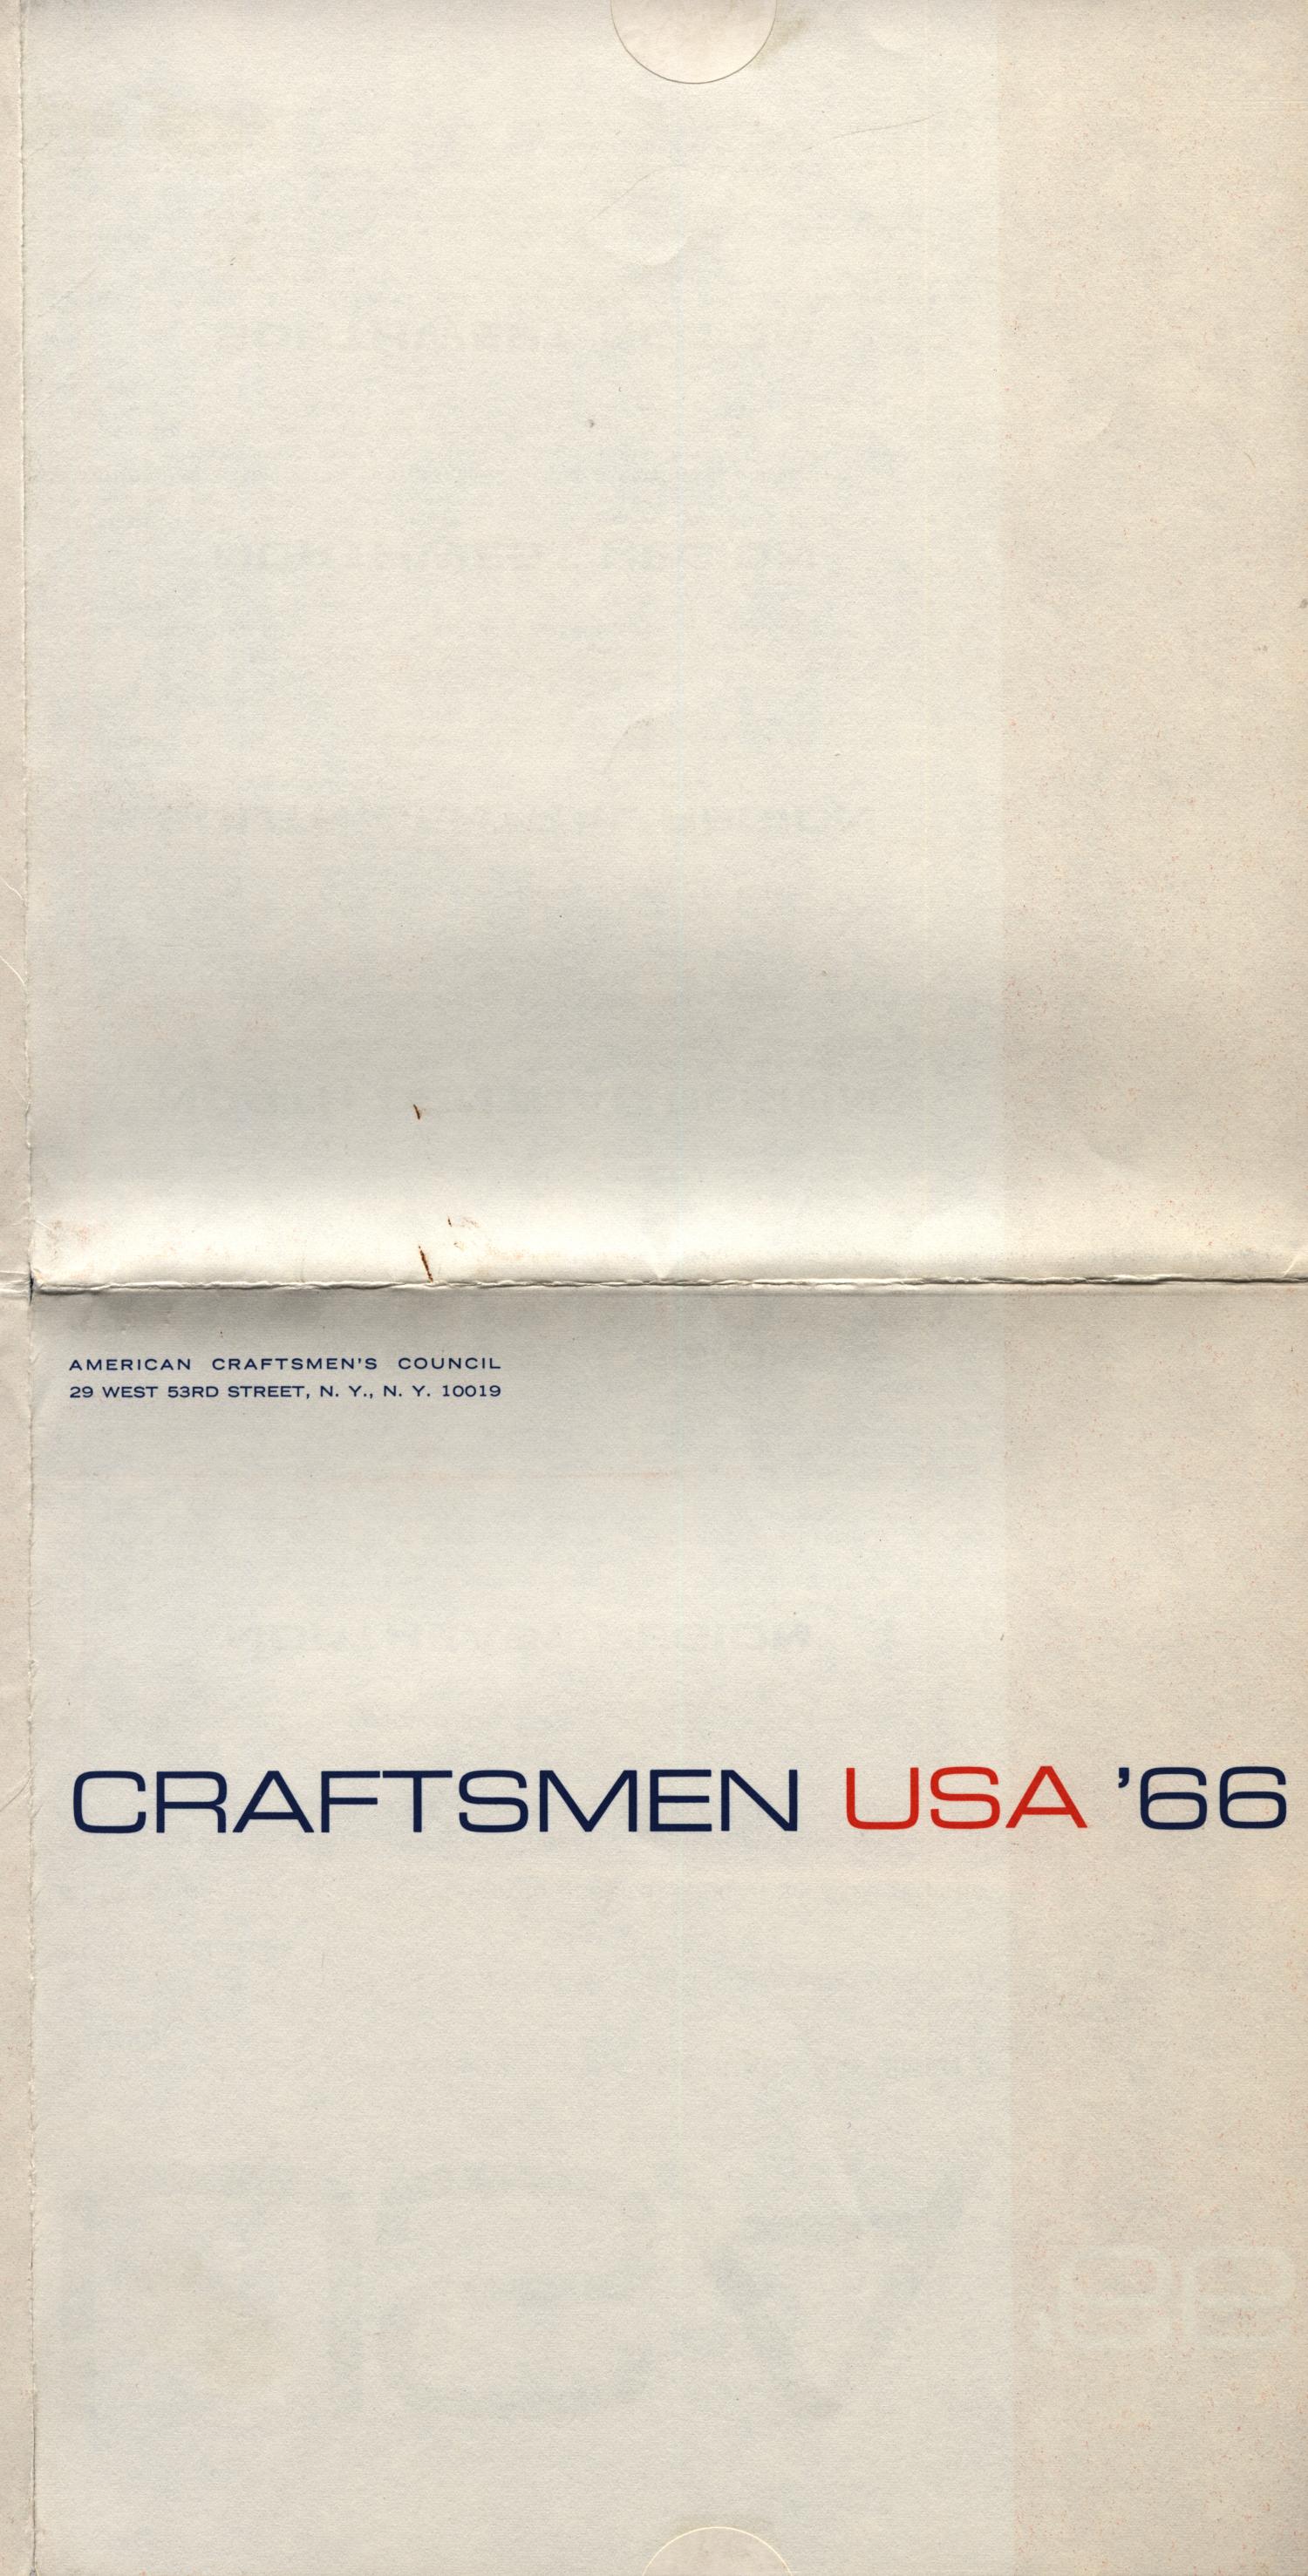 Craftsmen USA '66 [Entry form]
                                                
                                                    1
                                                